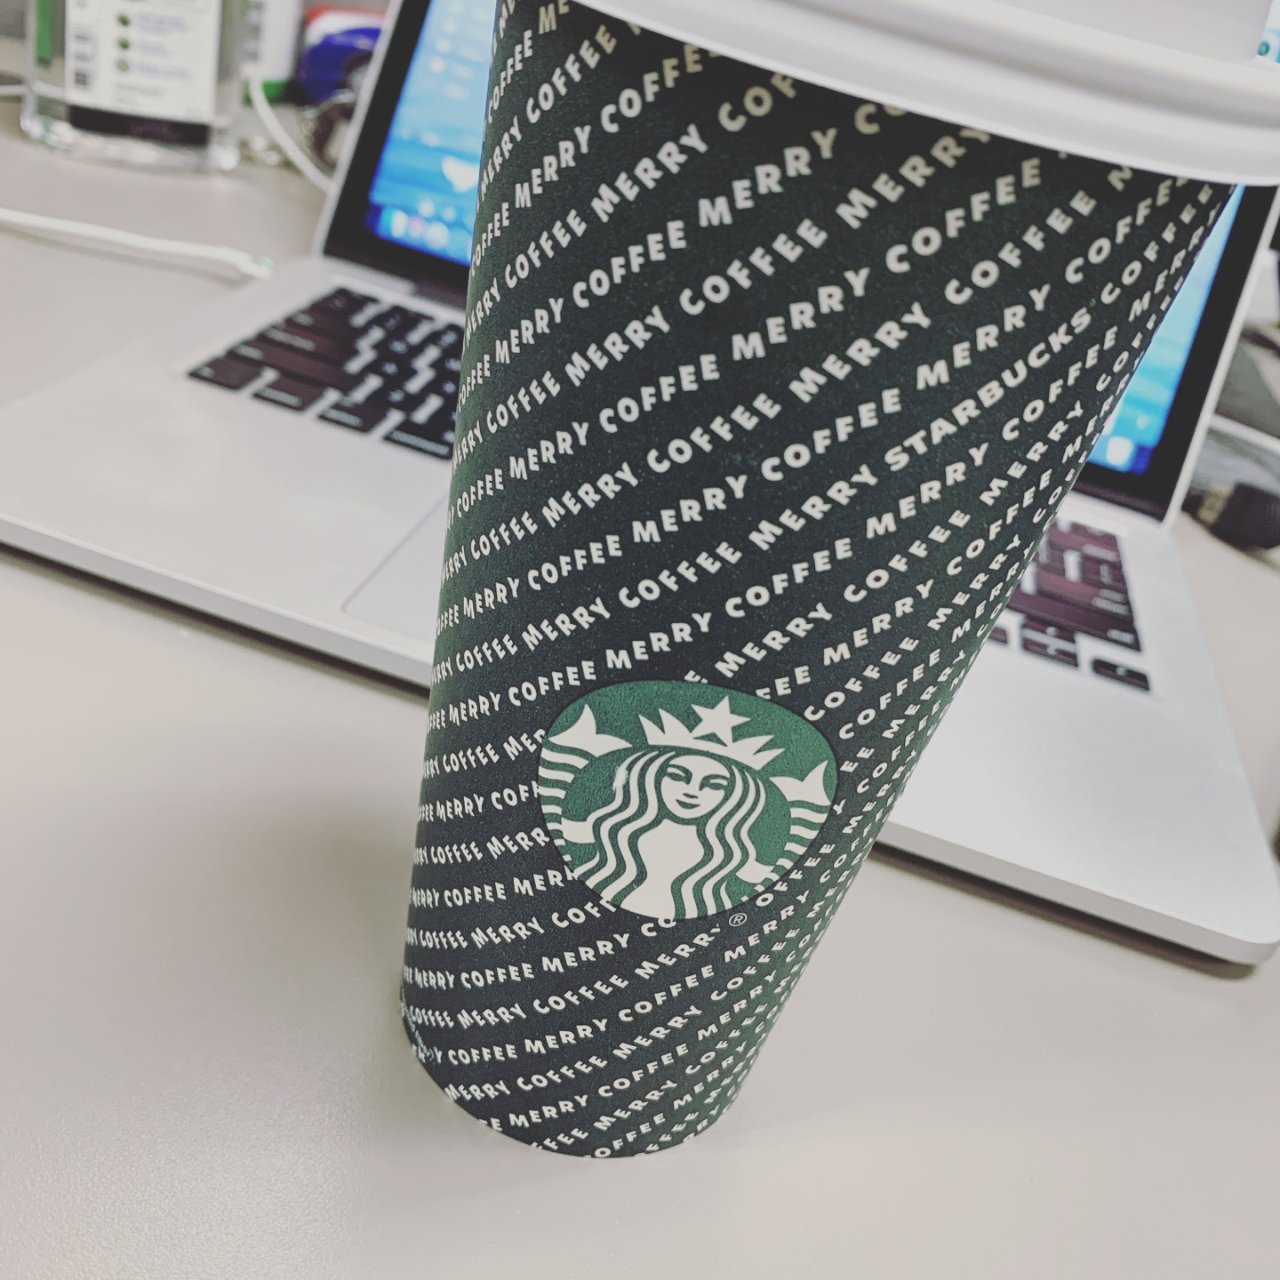 Starbucks 星巴克,holiday season,Holiday drinks